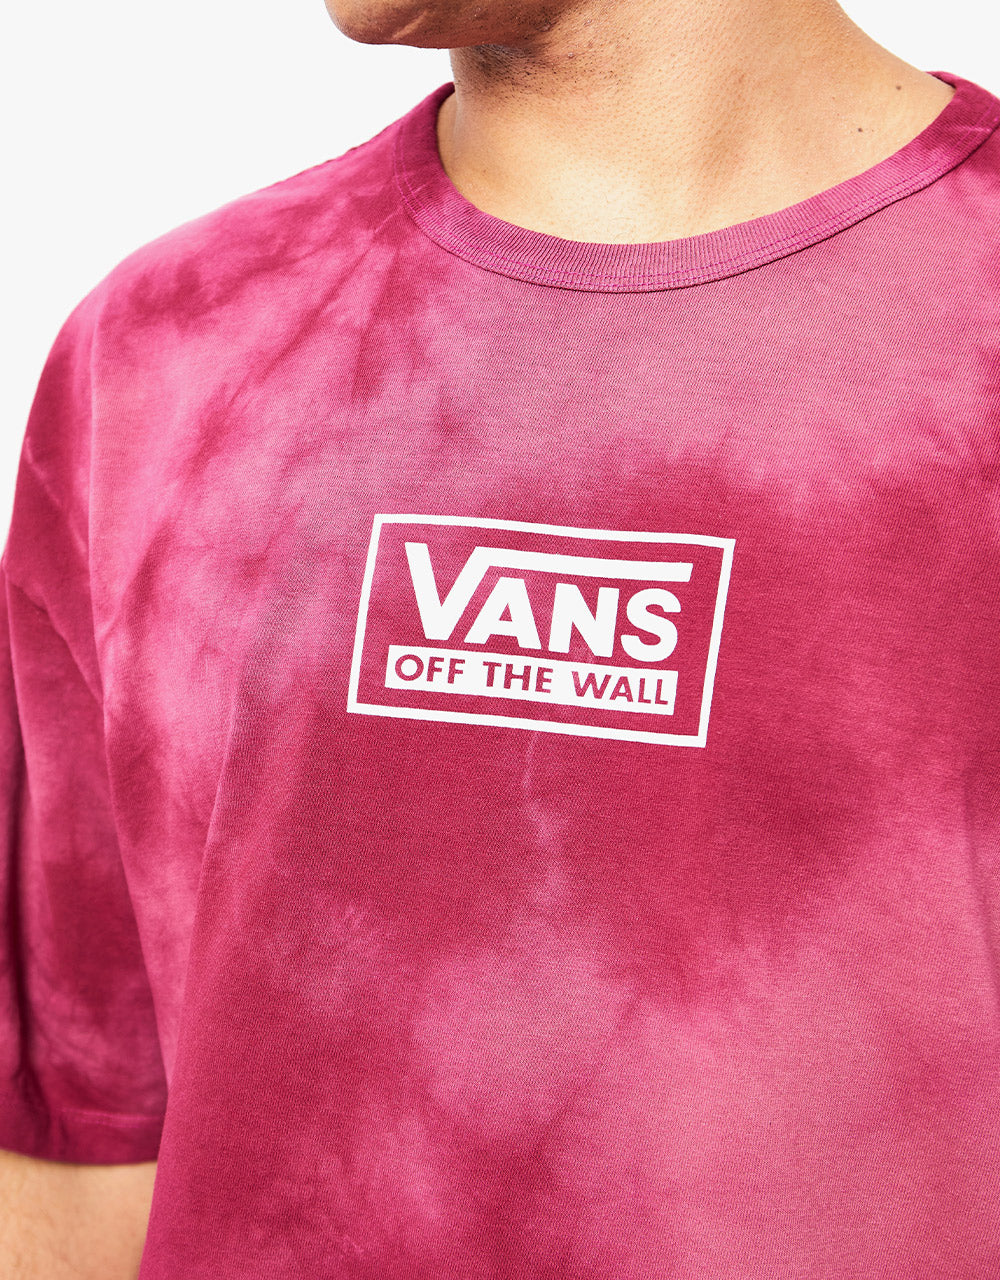 Vans Off The Wall Spot Tie Dye T-Shirt - Raspberry Radiance